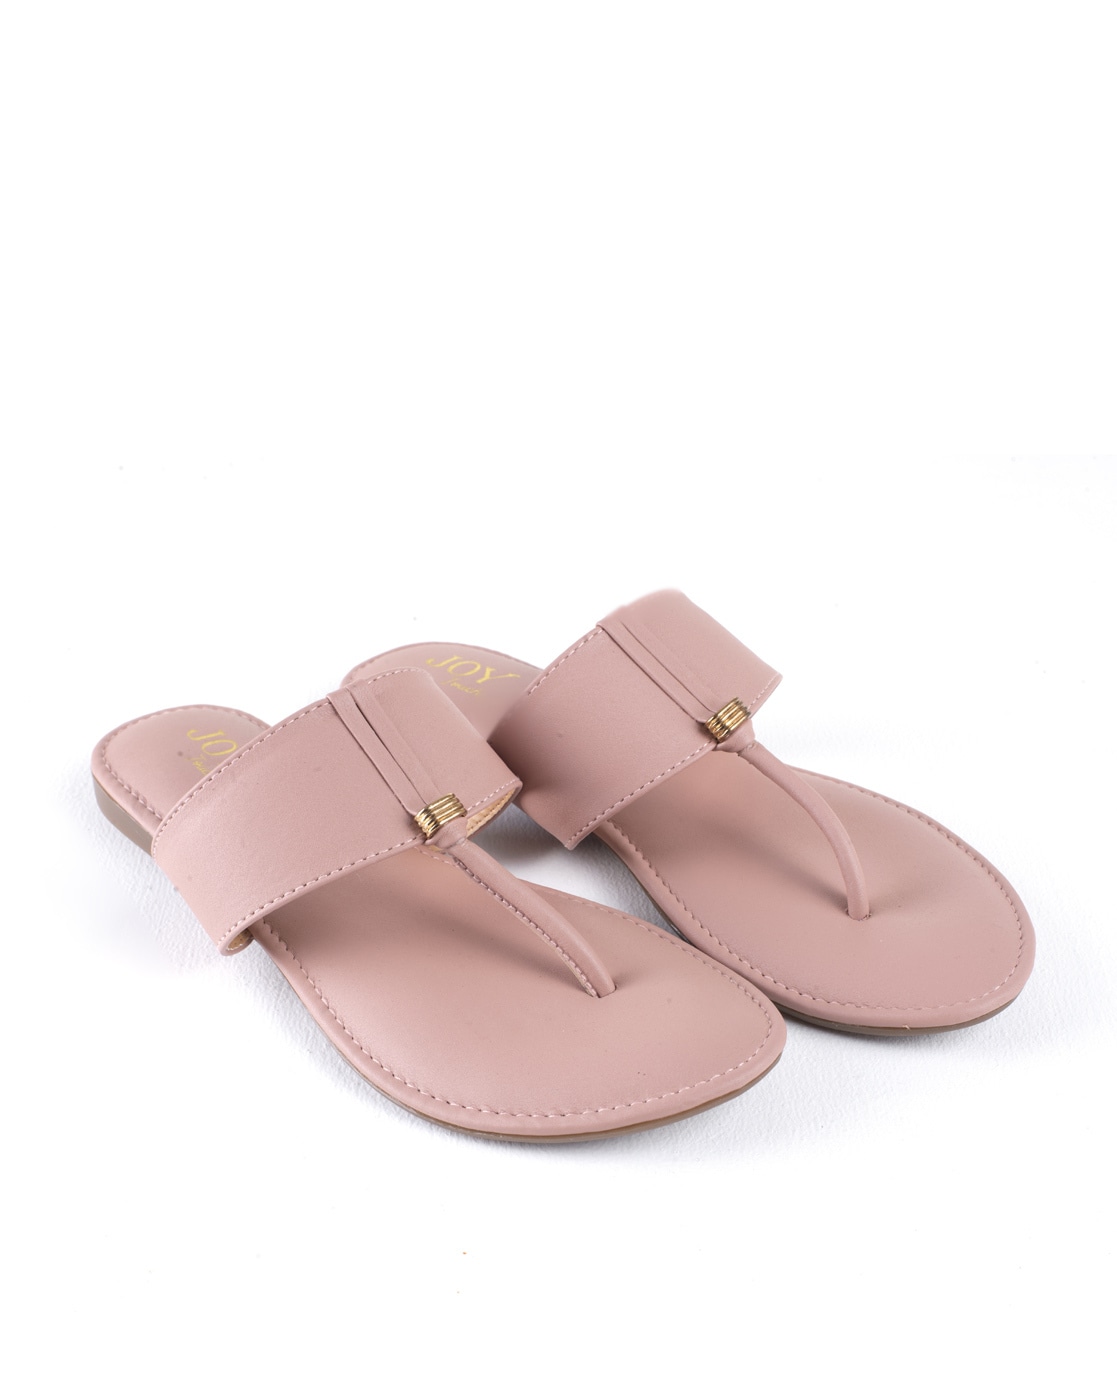 Buy Peach Flat Sandals for Women by JOYTOUCH Online  Ajiocom